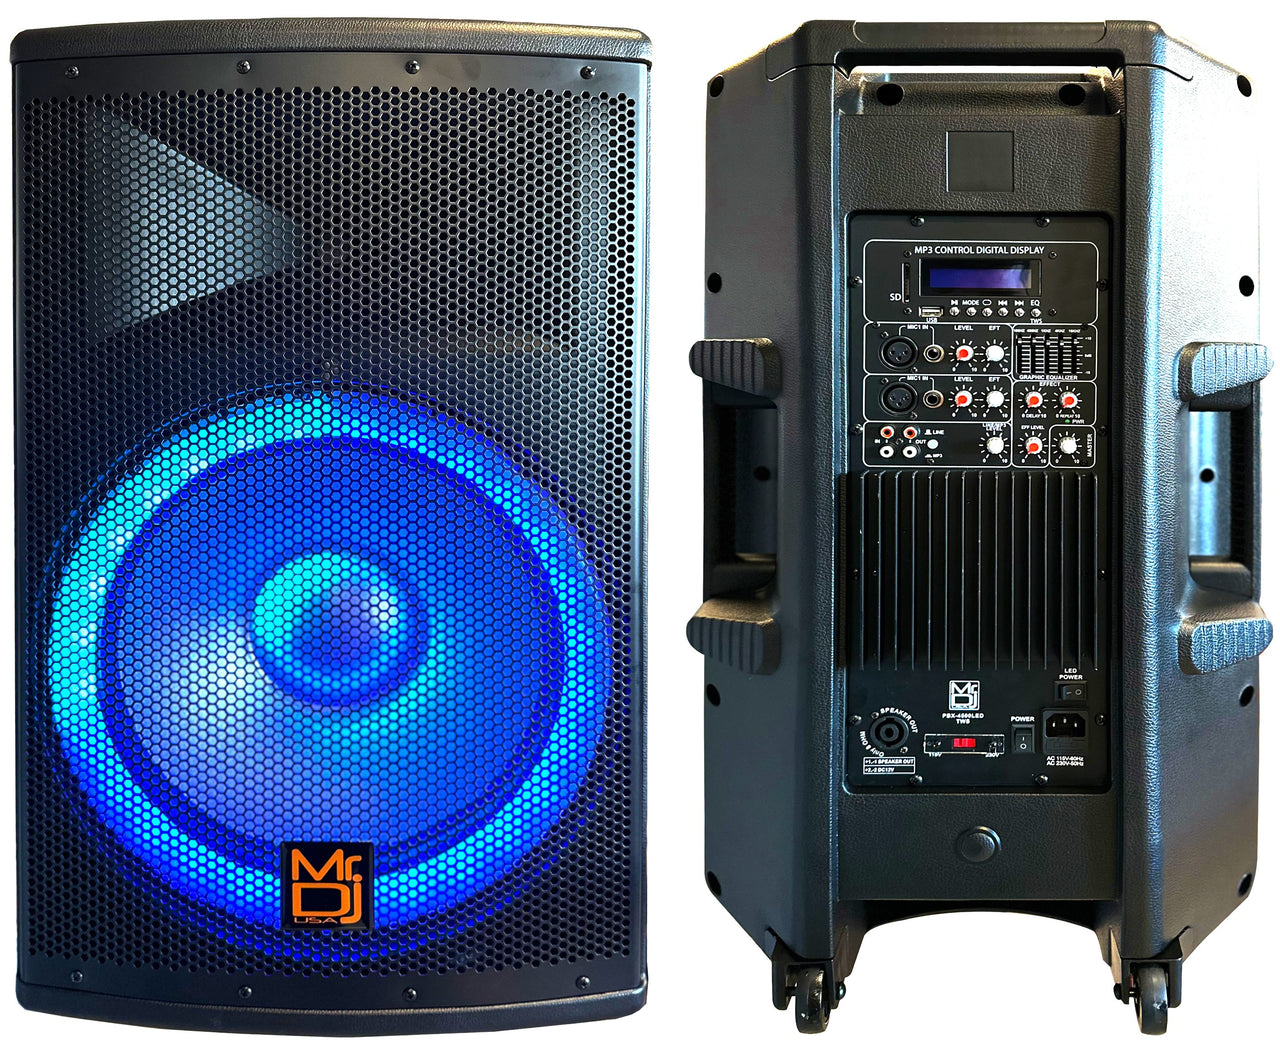 MR DJ PBX4500LED 15" 2-Way PA DJ 4500W Active Powered Bluetooth LED Speaker + Speaker Stand